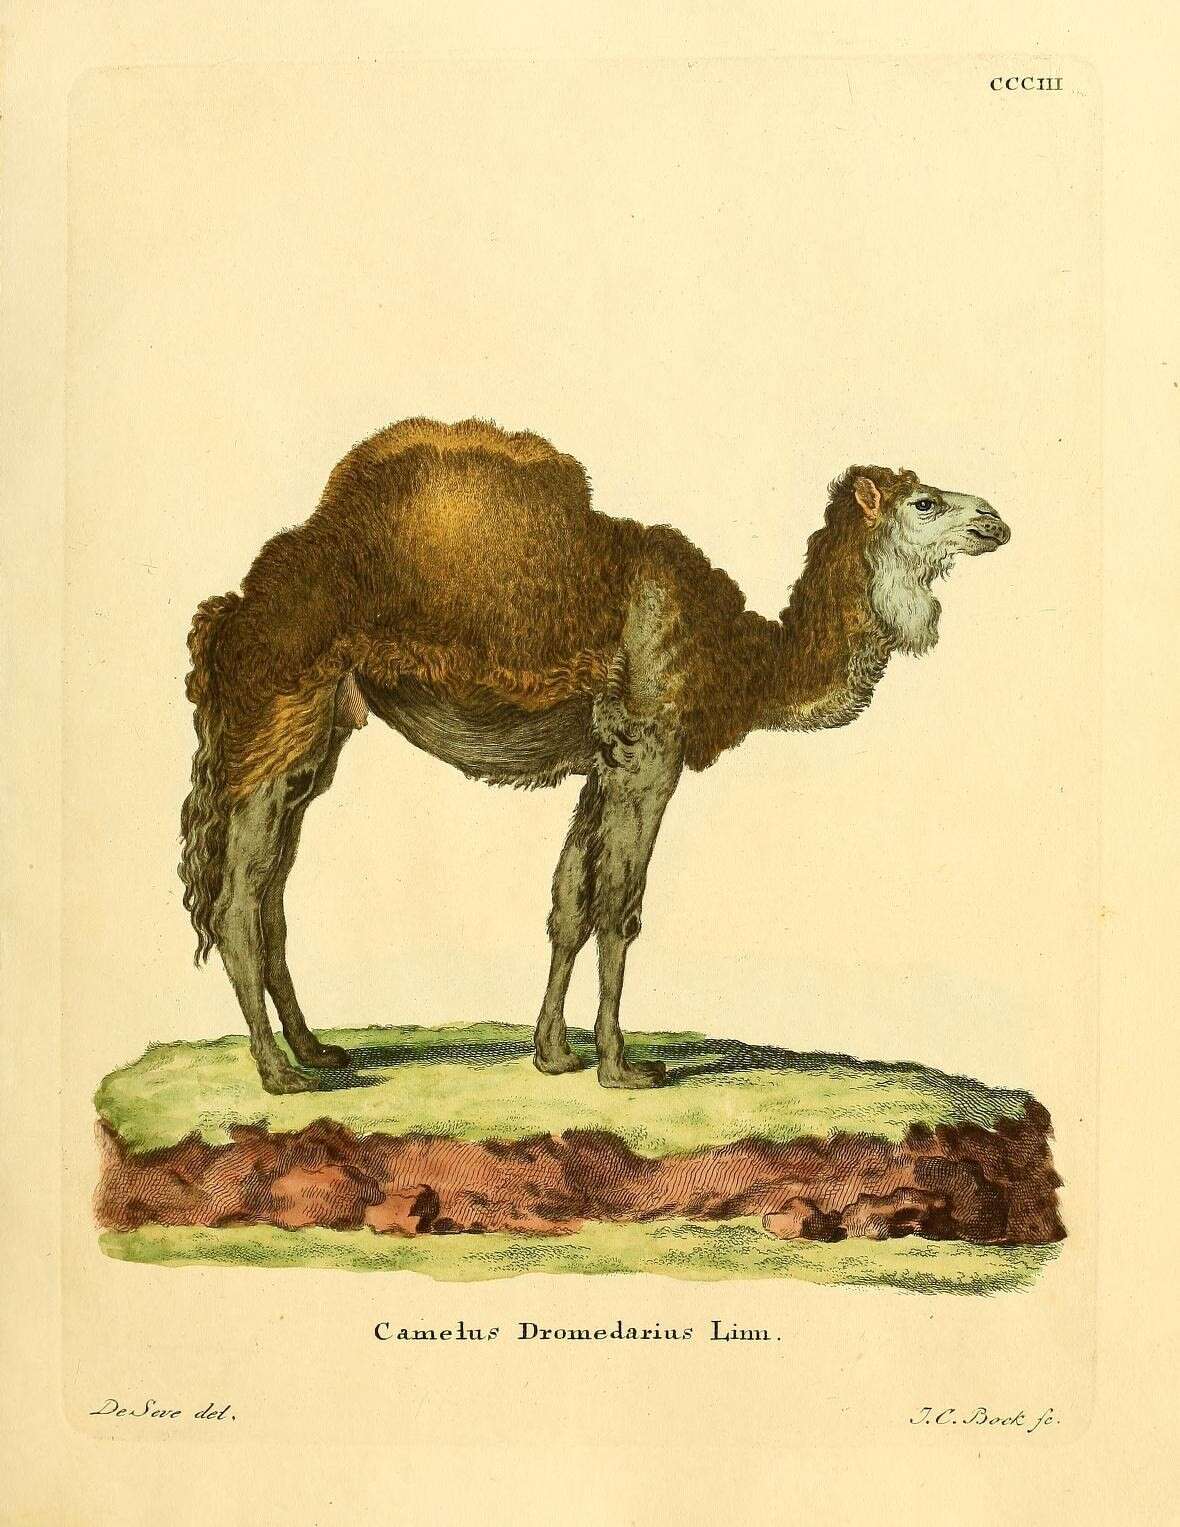 Image of camels